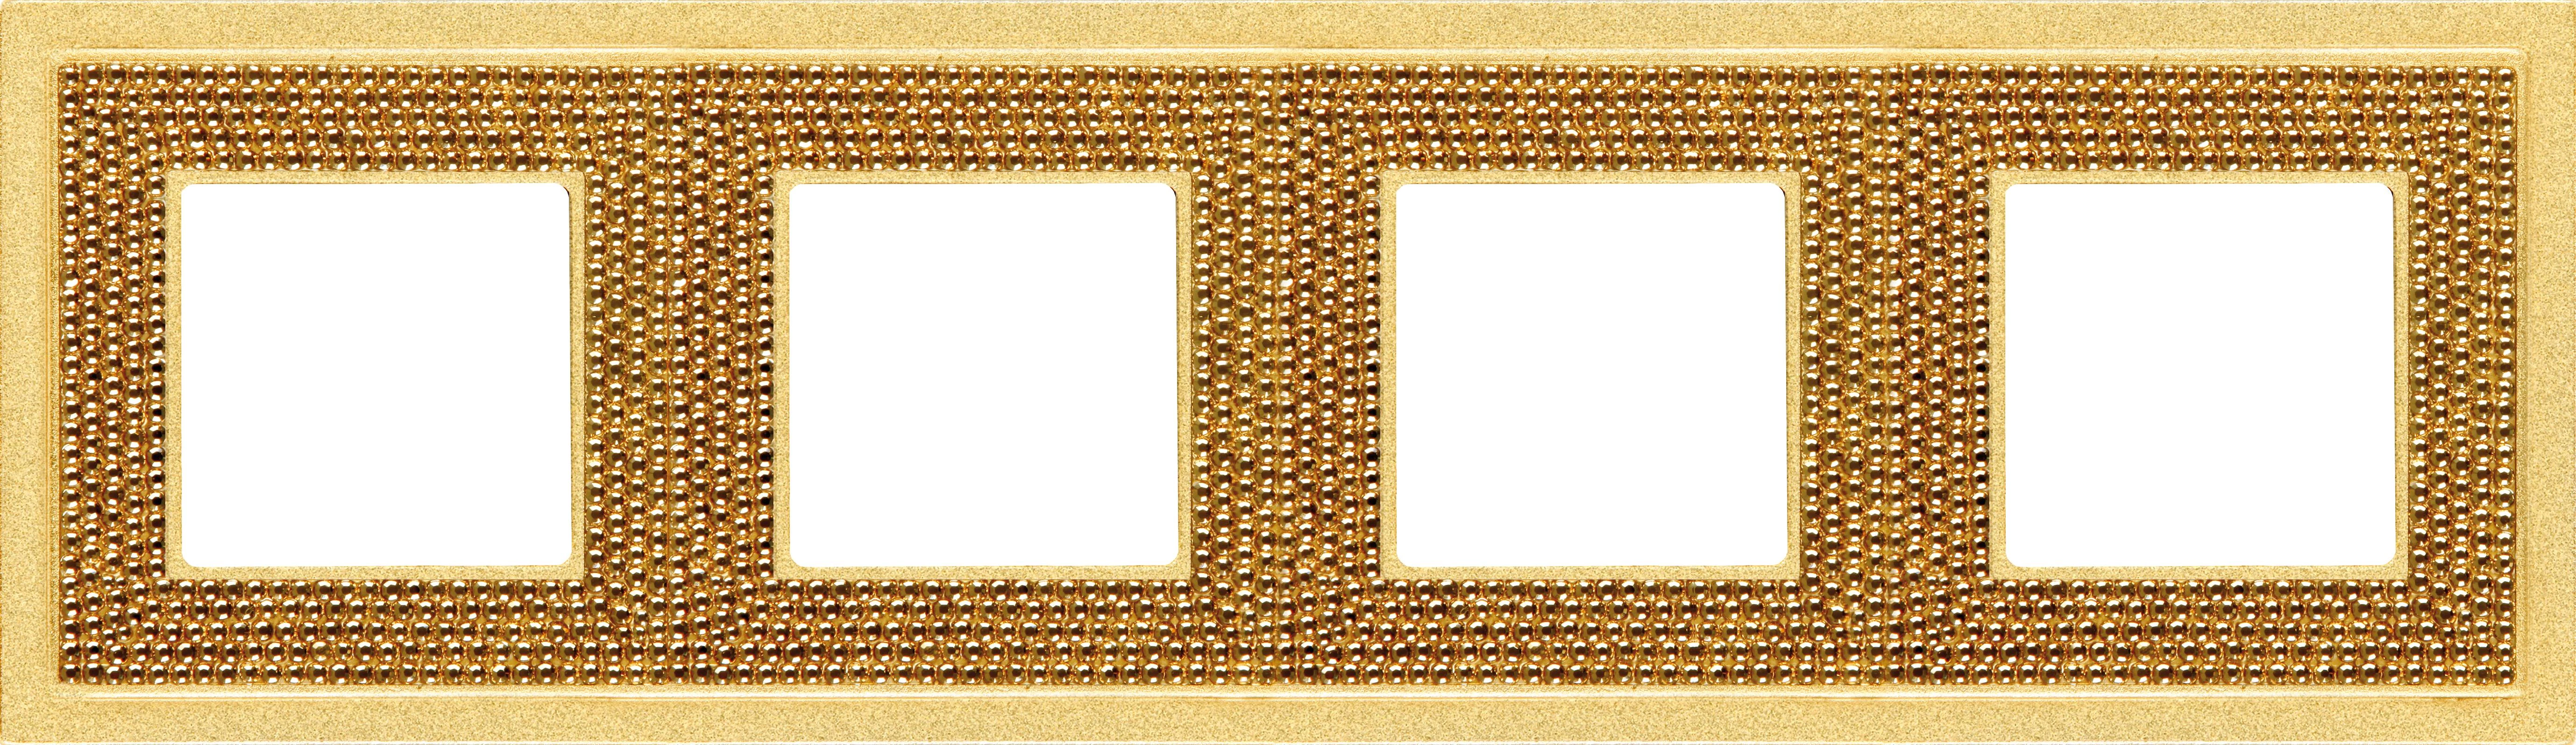  артикул FD01294OR название Рамка 4-ая (четверная), цвет Красное золото, Crystal De Luxe Art, Fede